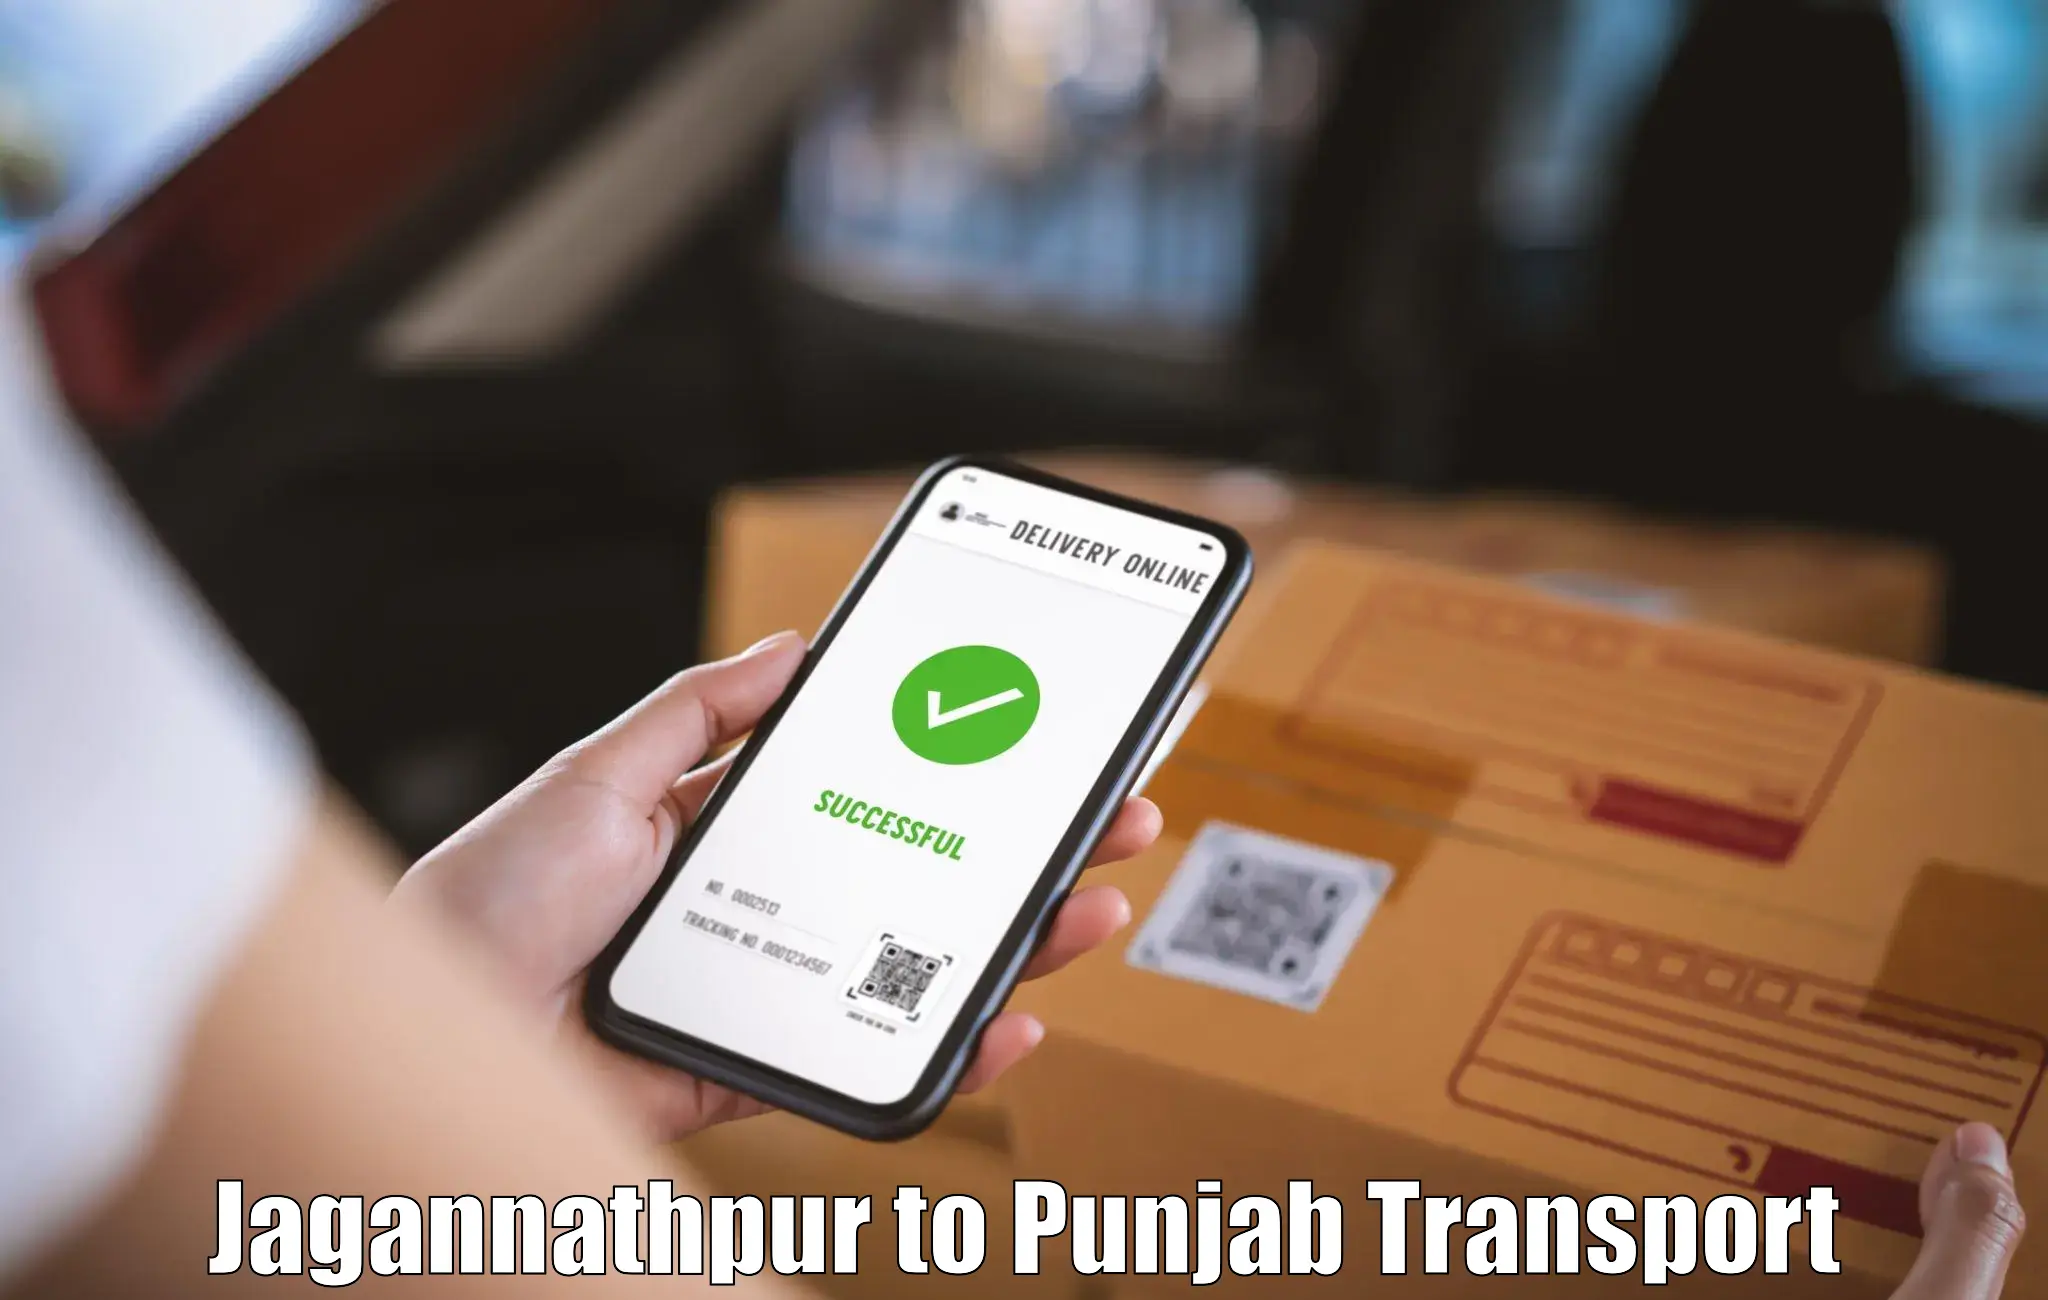 Transport shared services Jagannathpur to Patiala